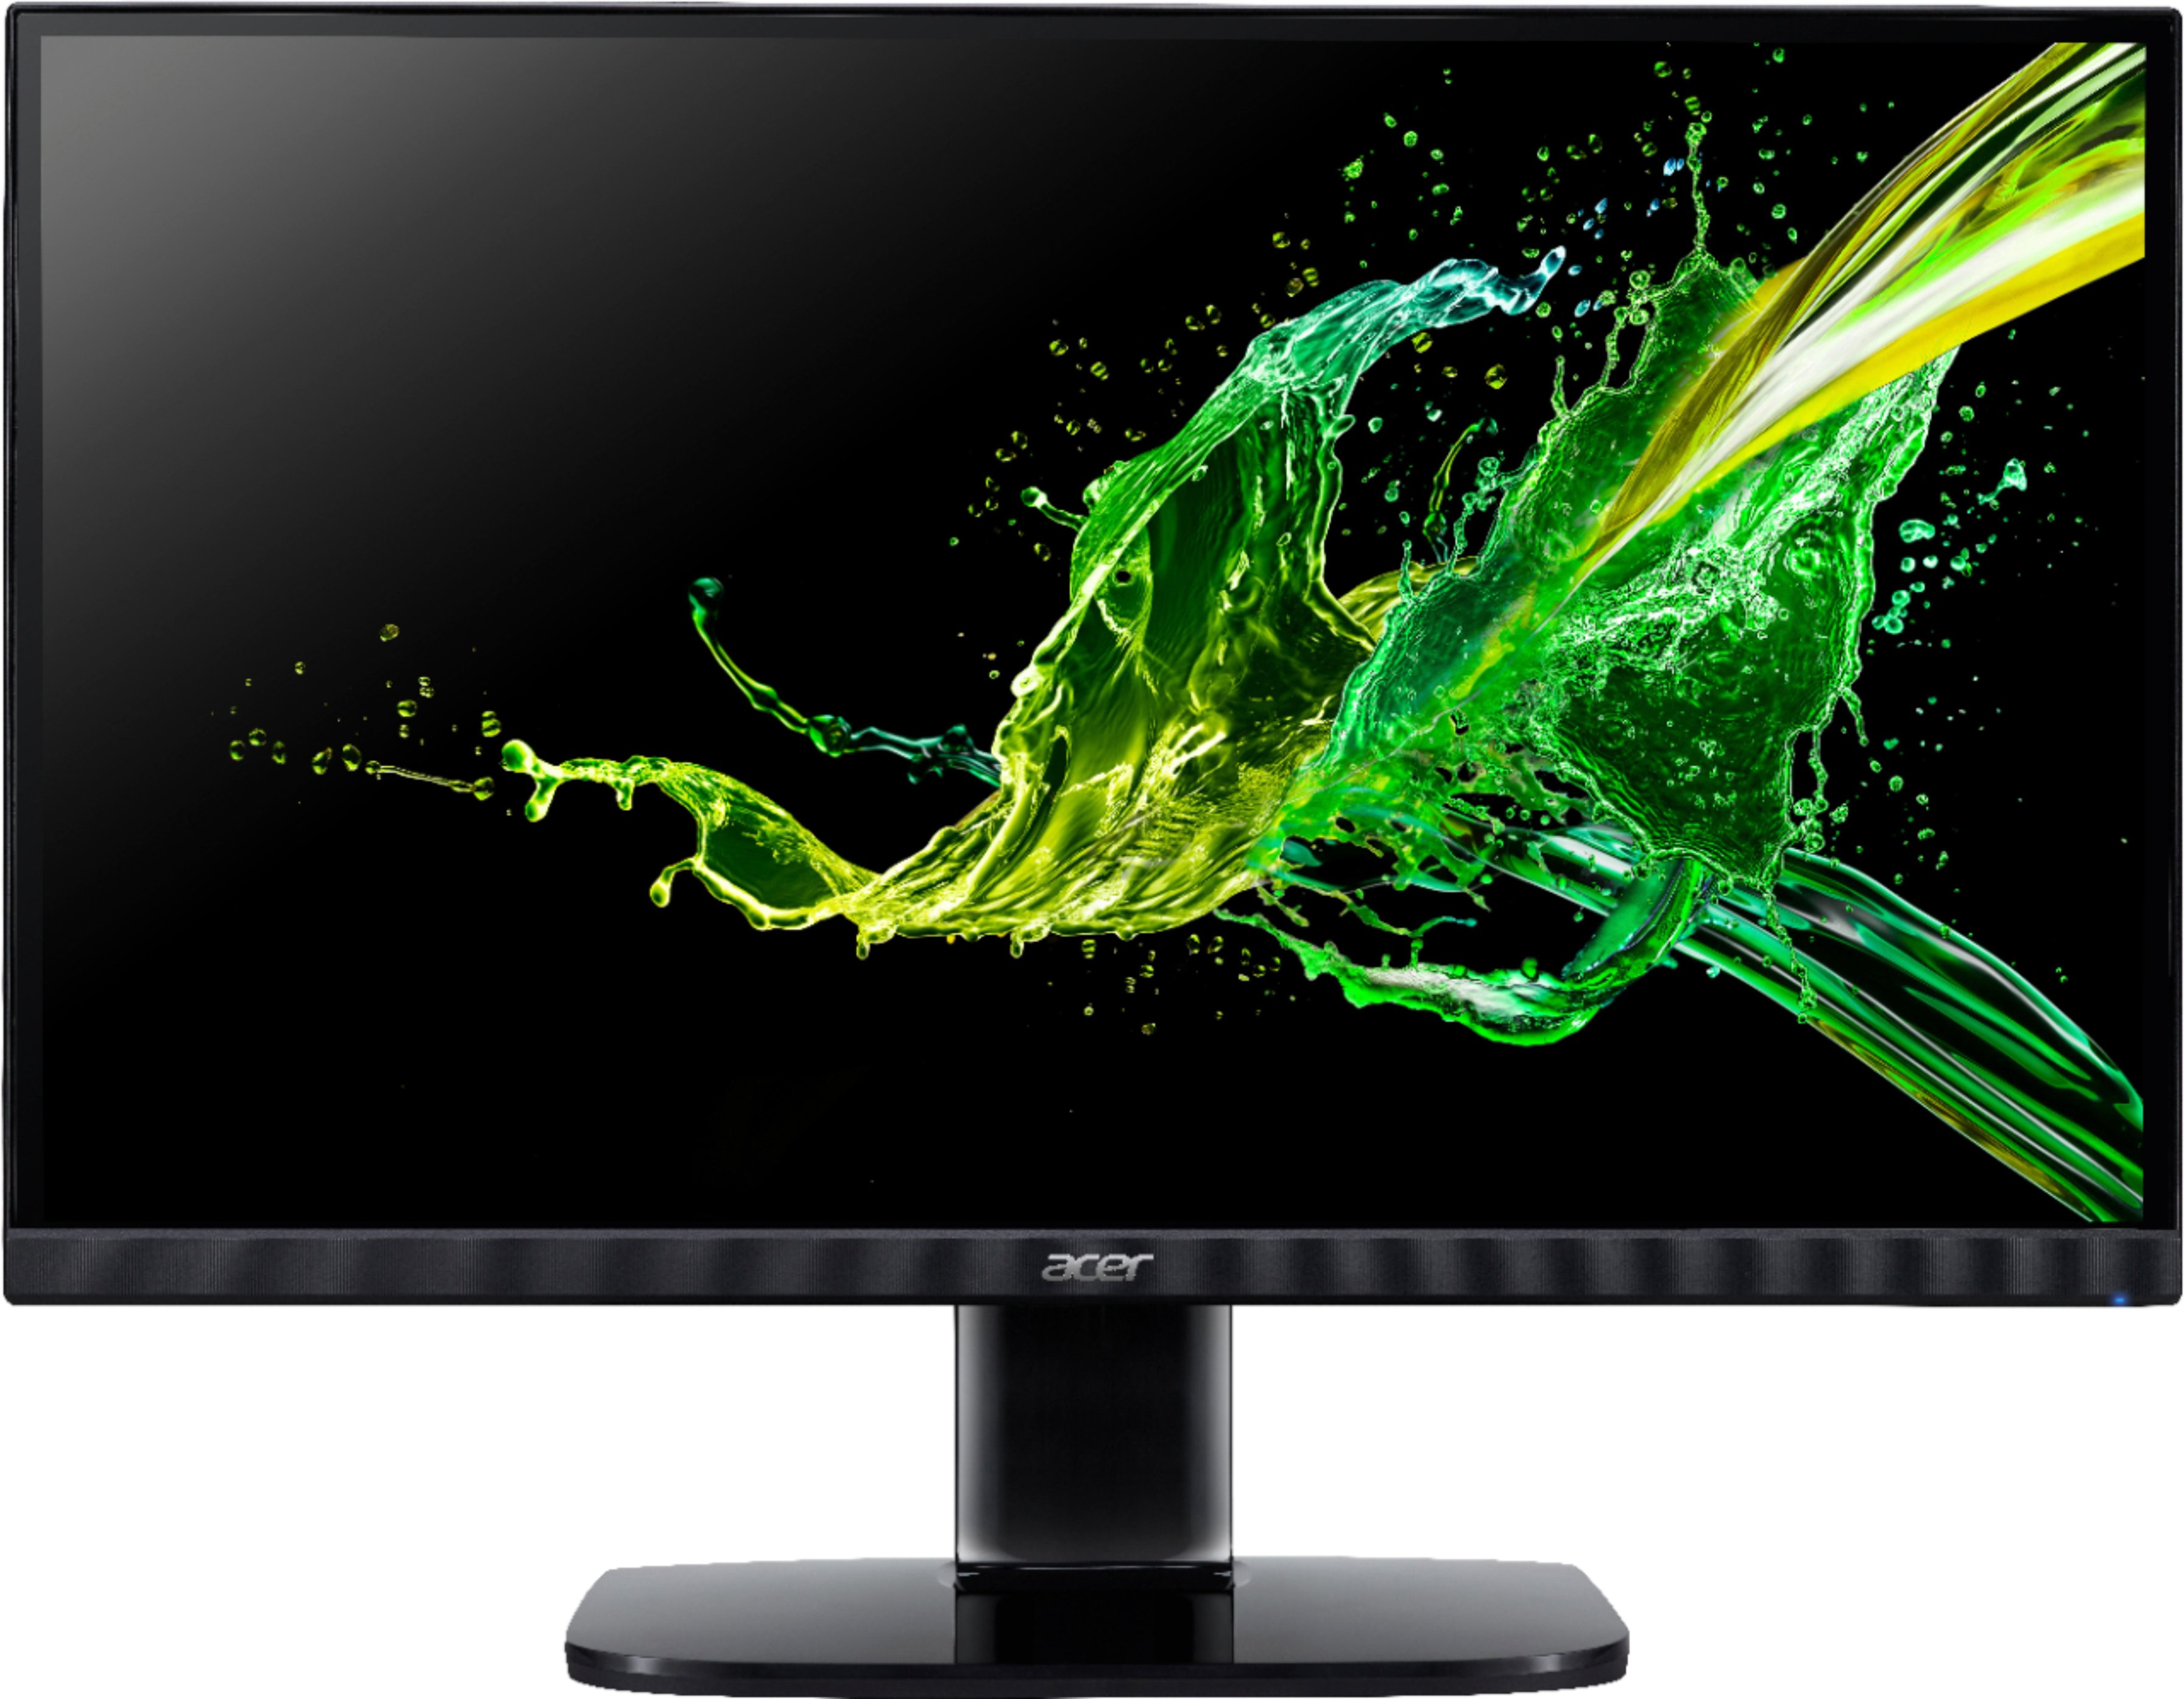 Acer - 27" IPS LED FHD FreeSync Monitor (HDMI, VGA) - Black